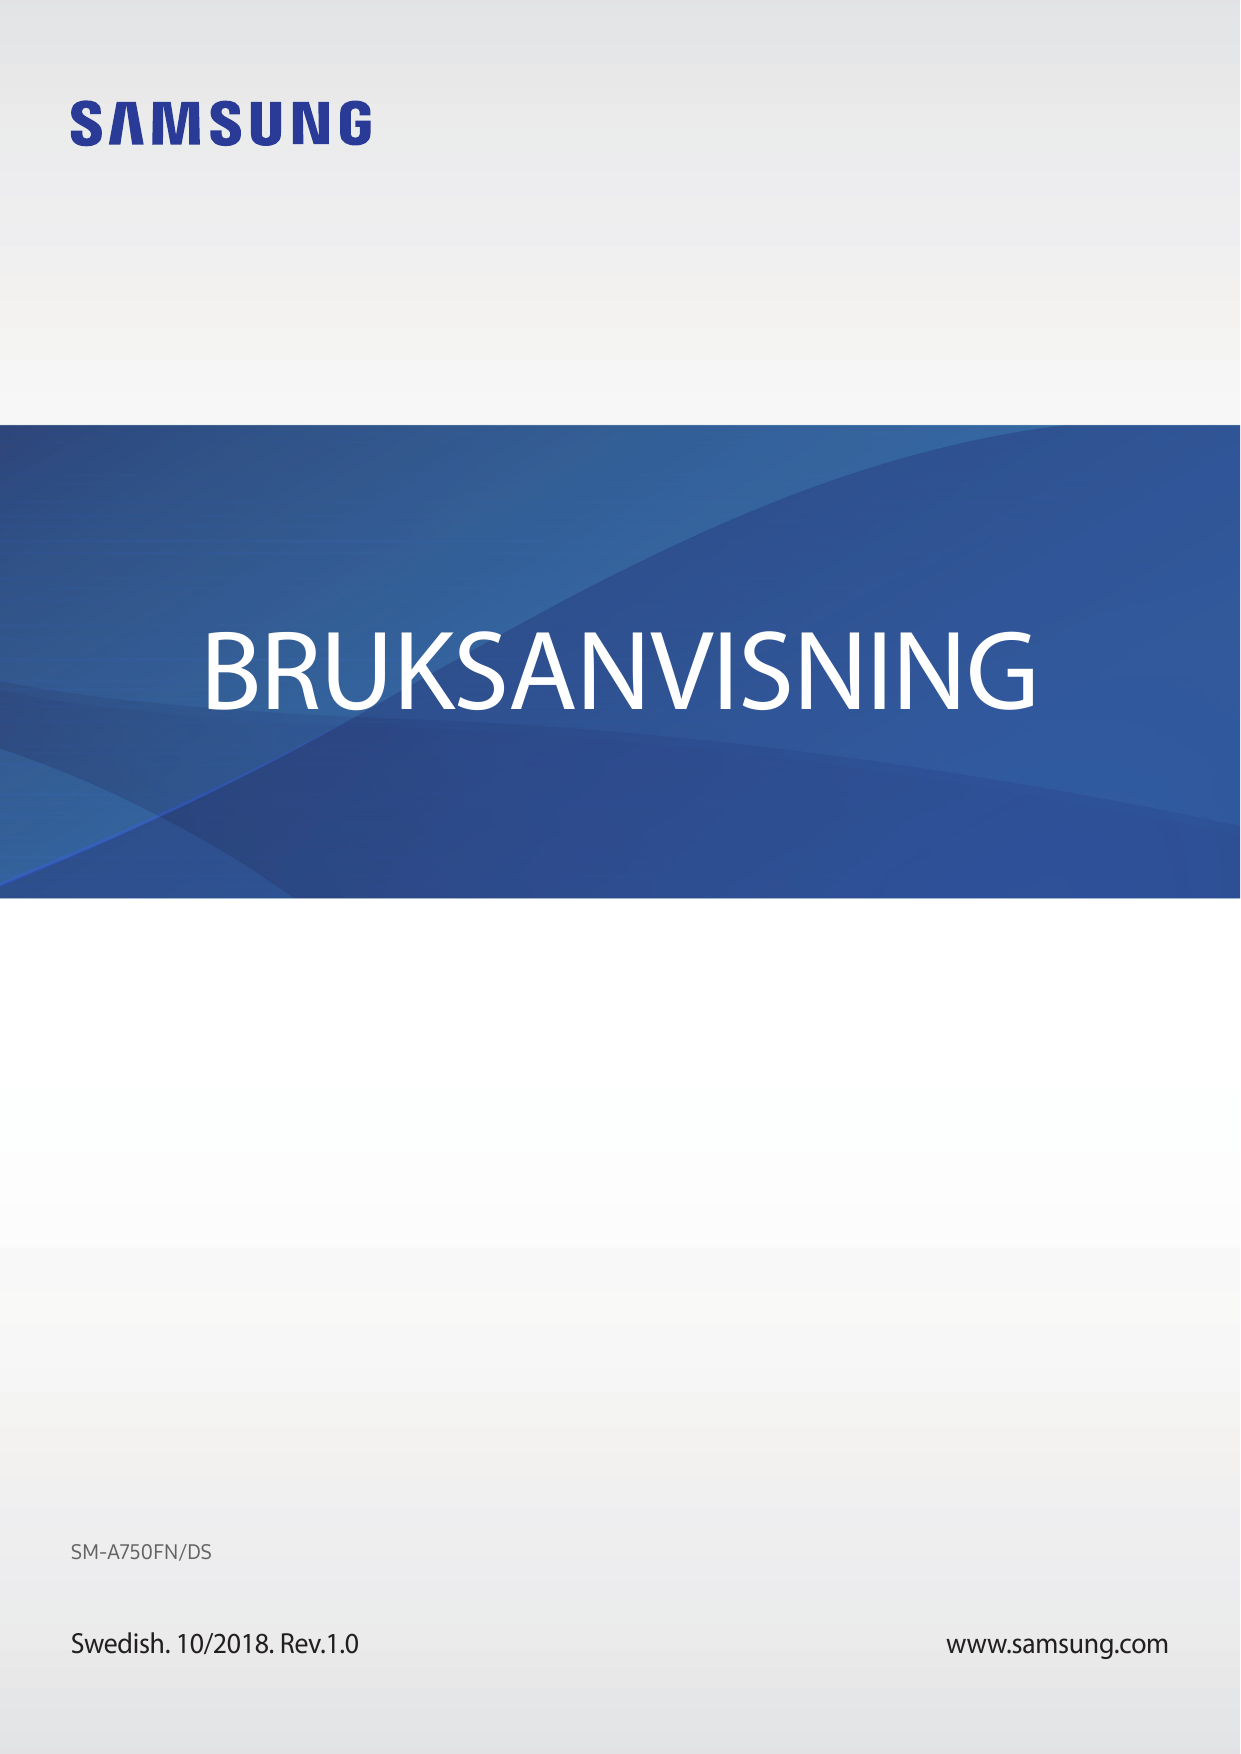 BRUKSANVISNINGSM-A750FN/DSSwedish. 10/2018. Rev.1.0www.samsung.com